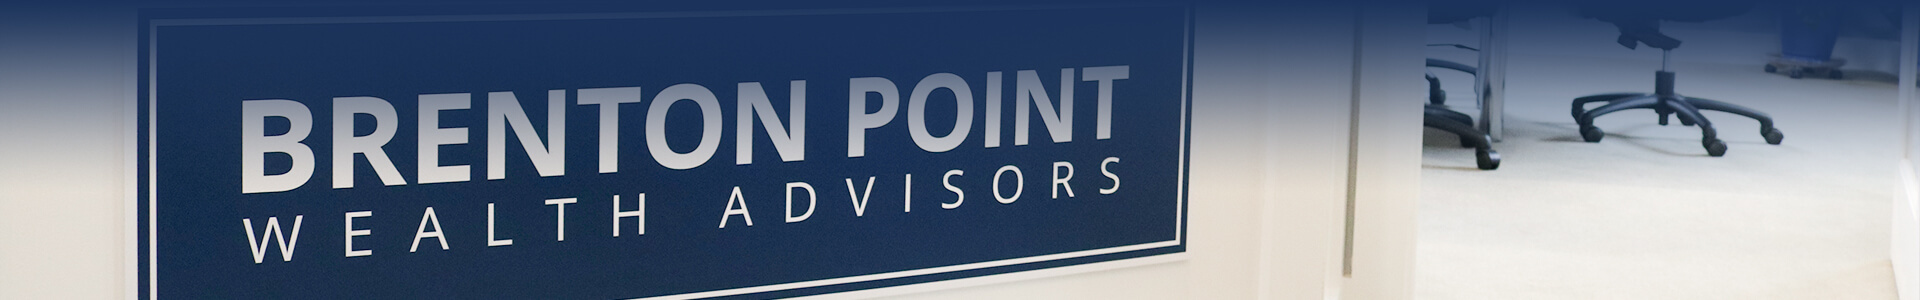 Brenton Point Services Header Image